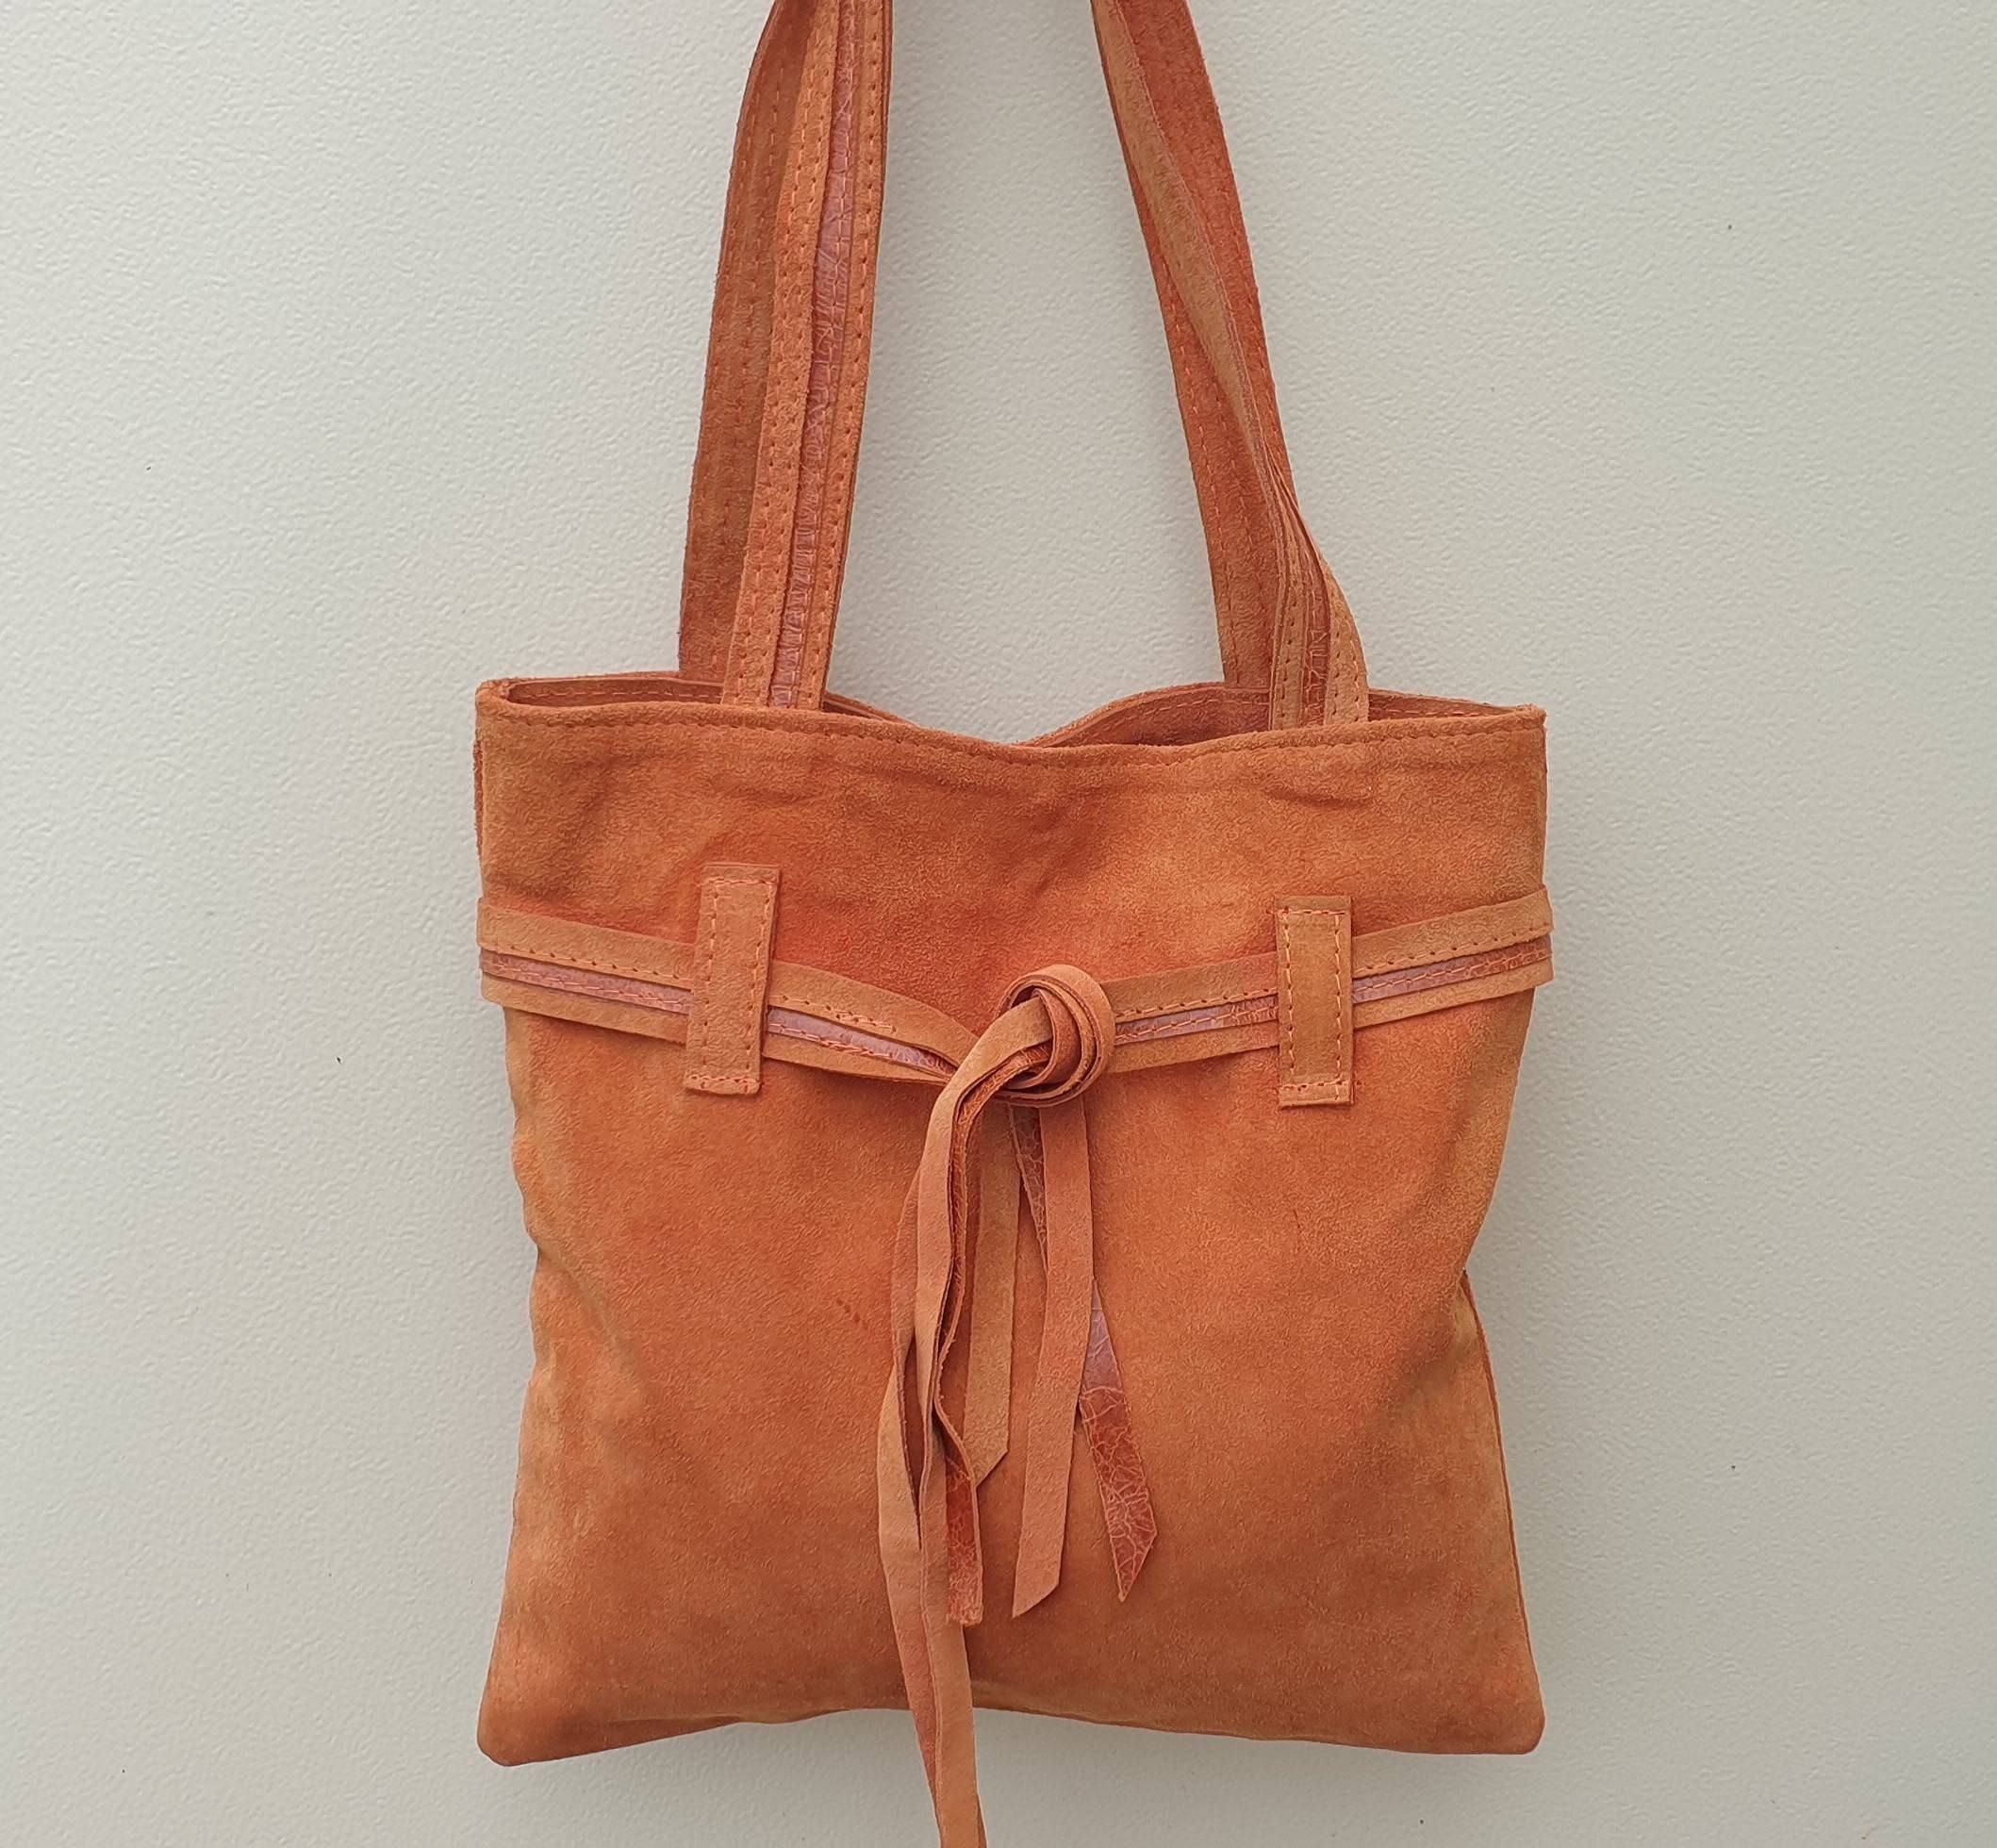 Buy Vintage Orange Bag Online In India -  India